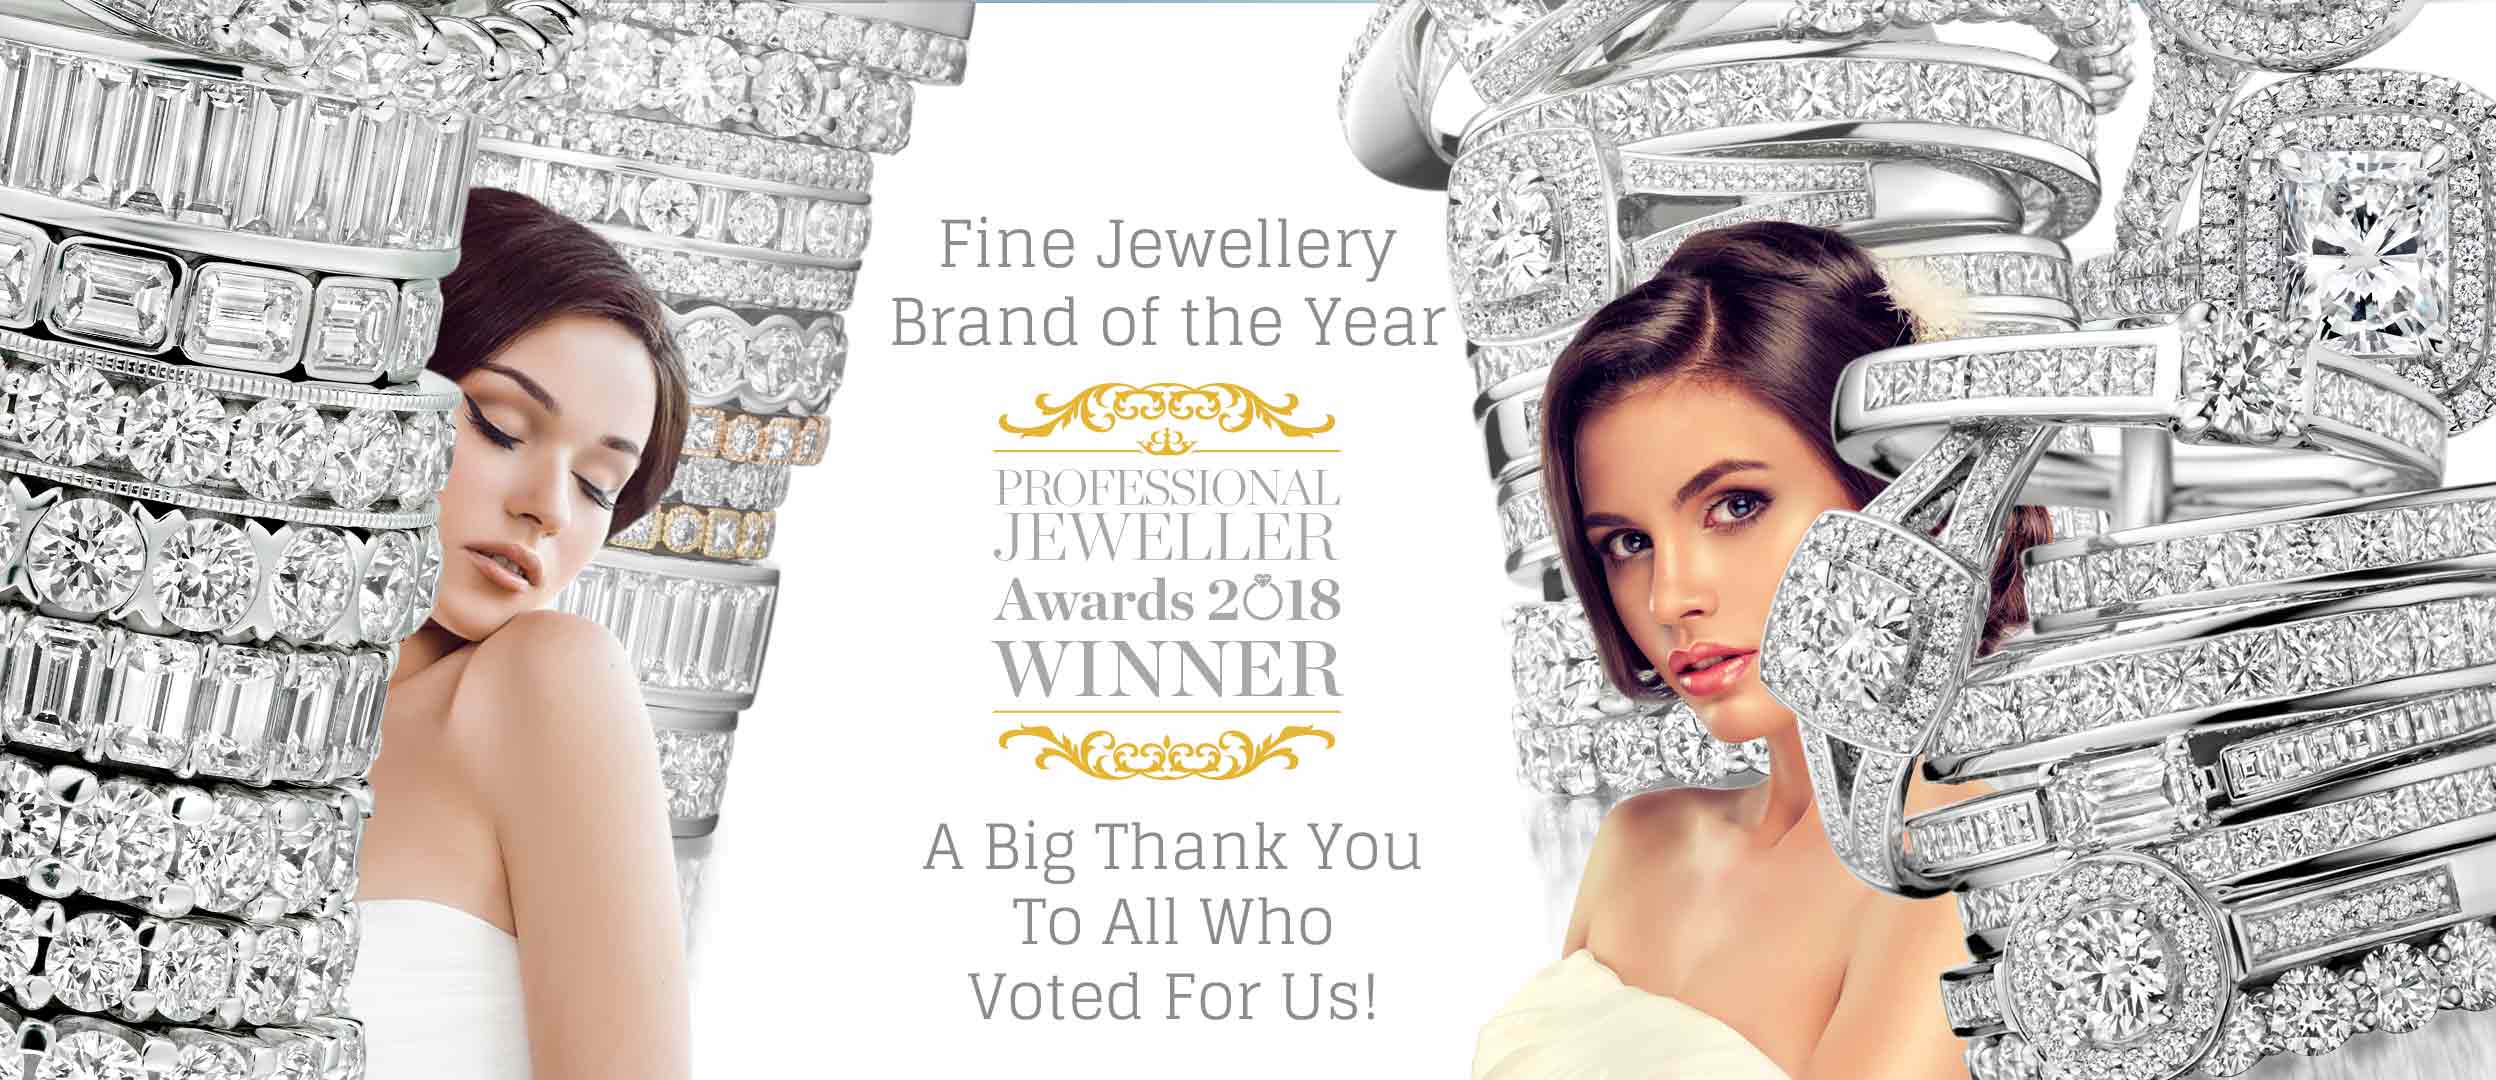 Fine Jewellery Brand of the Year Winner 2018